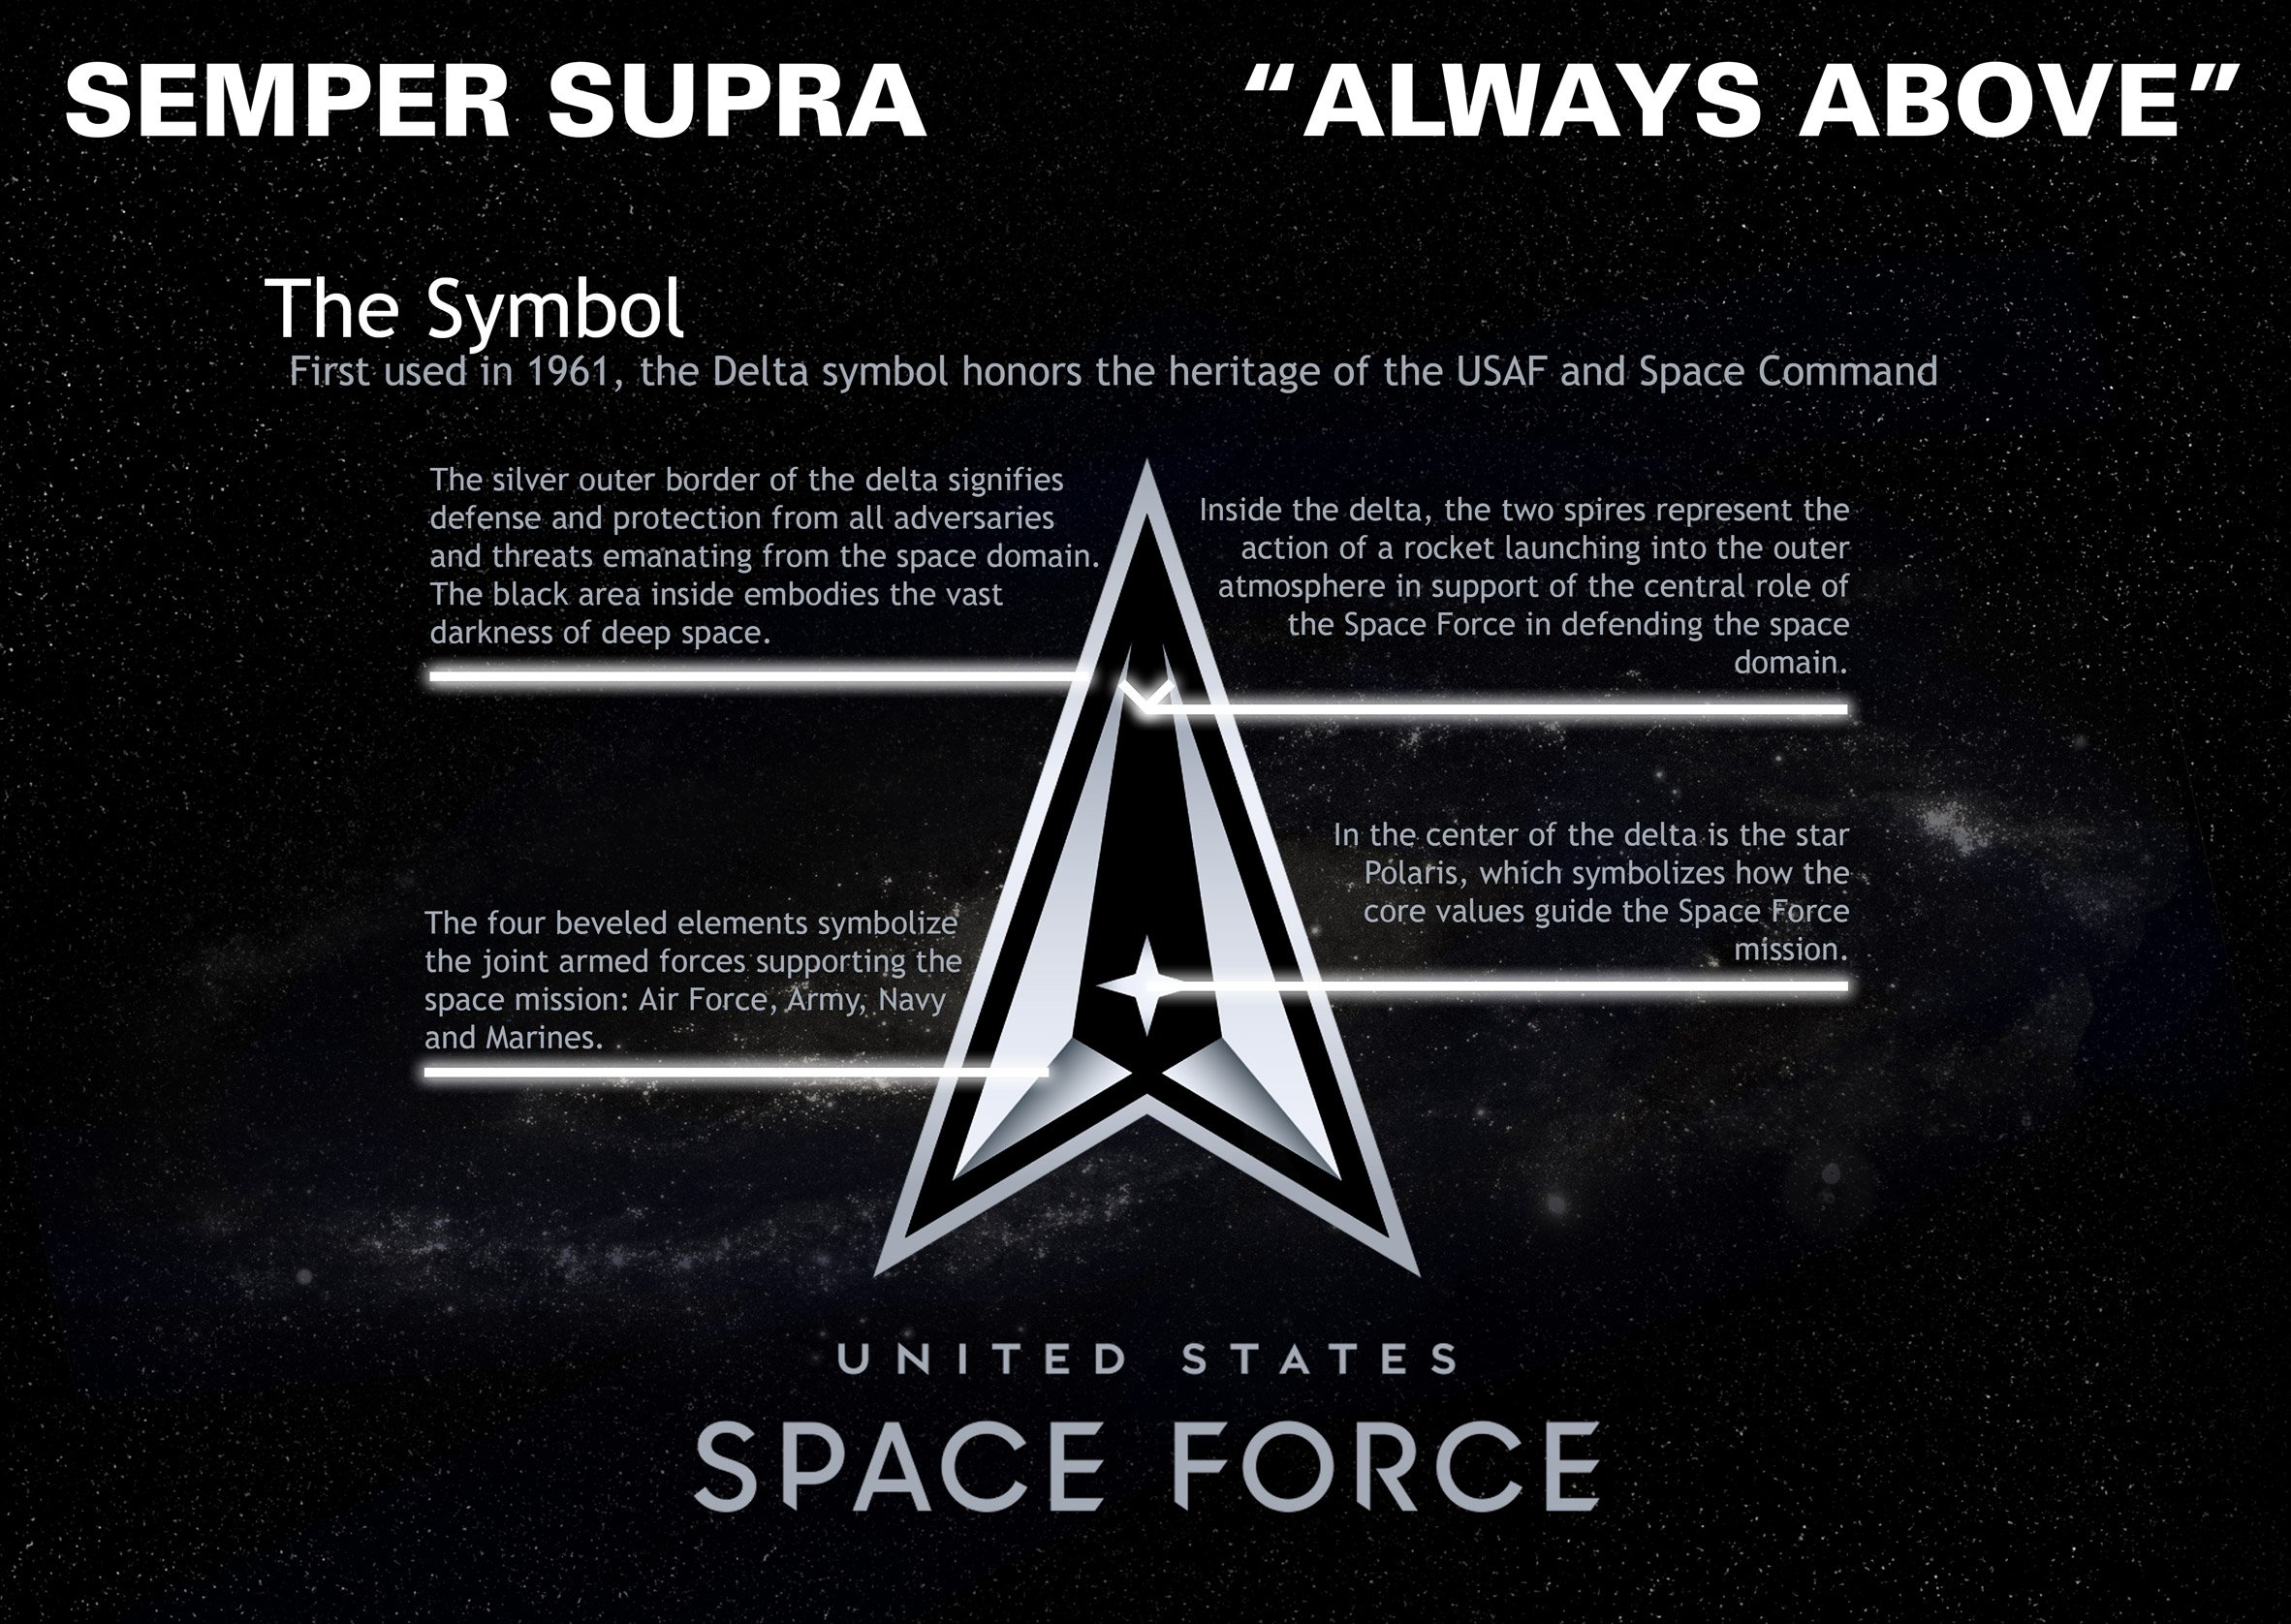 US space force unveils logo